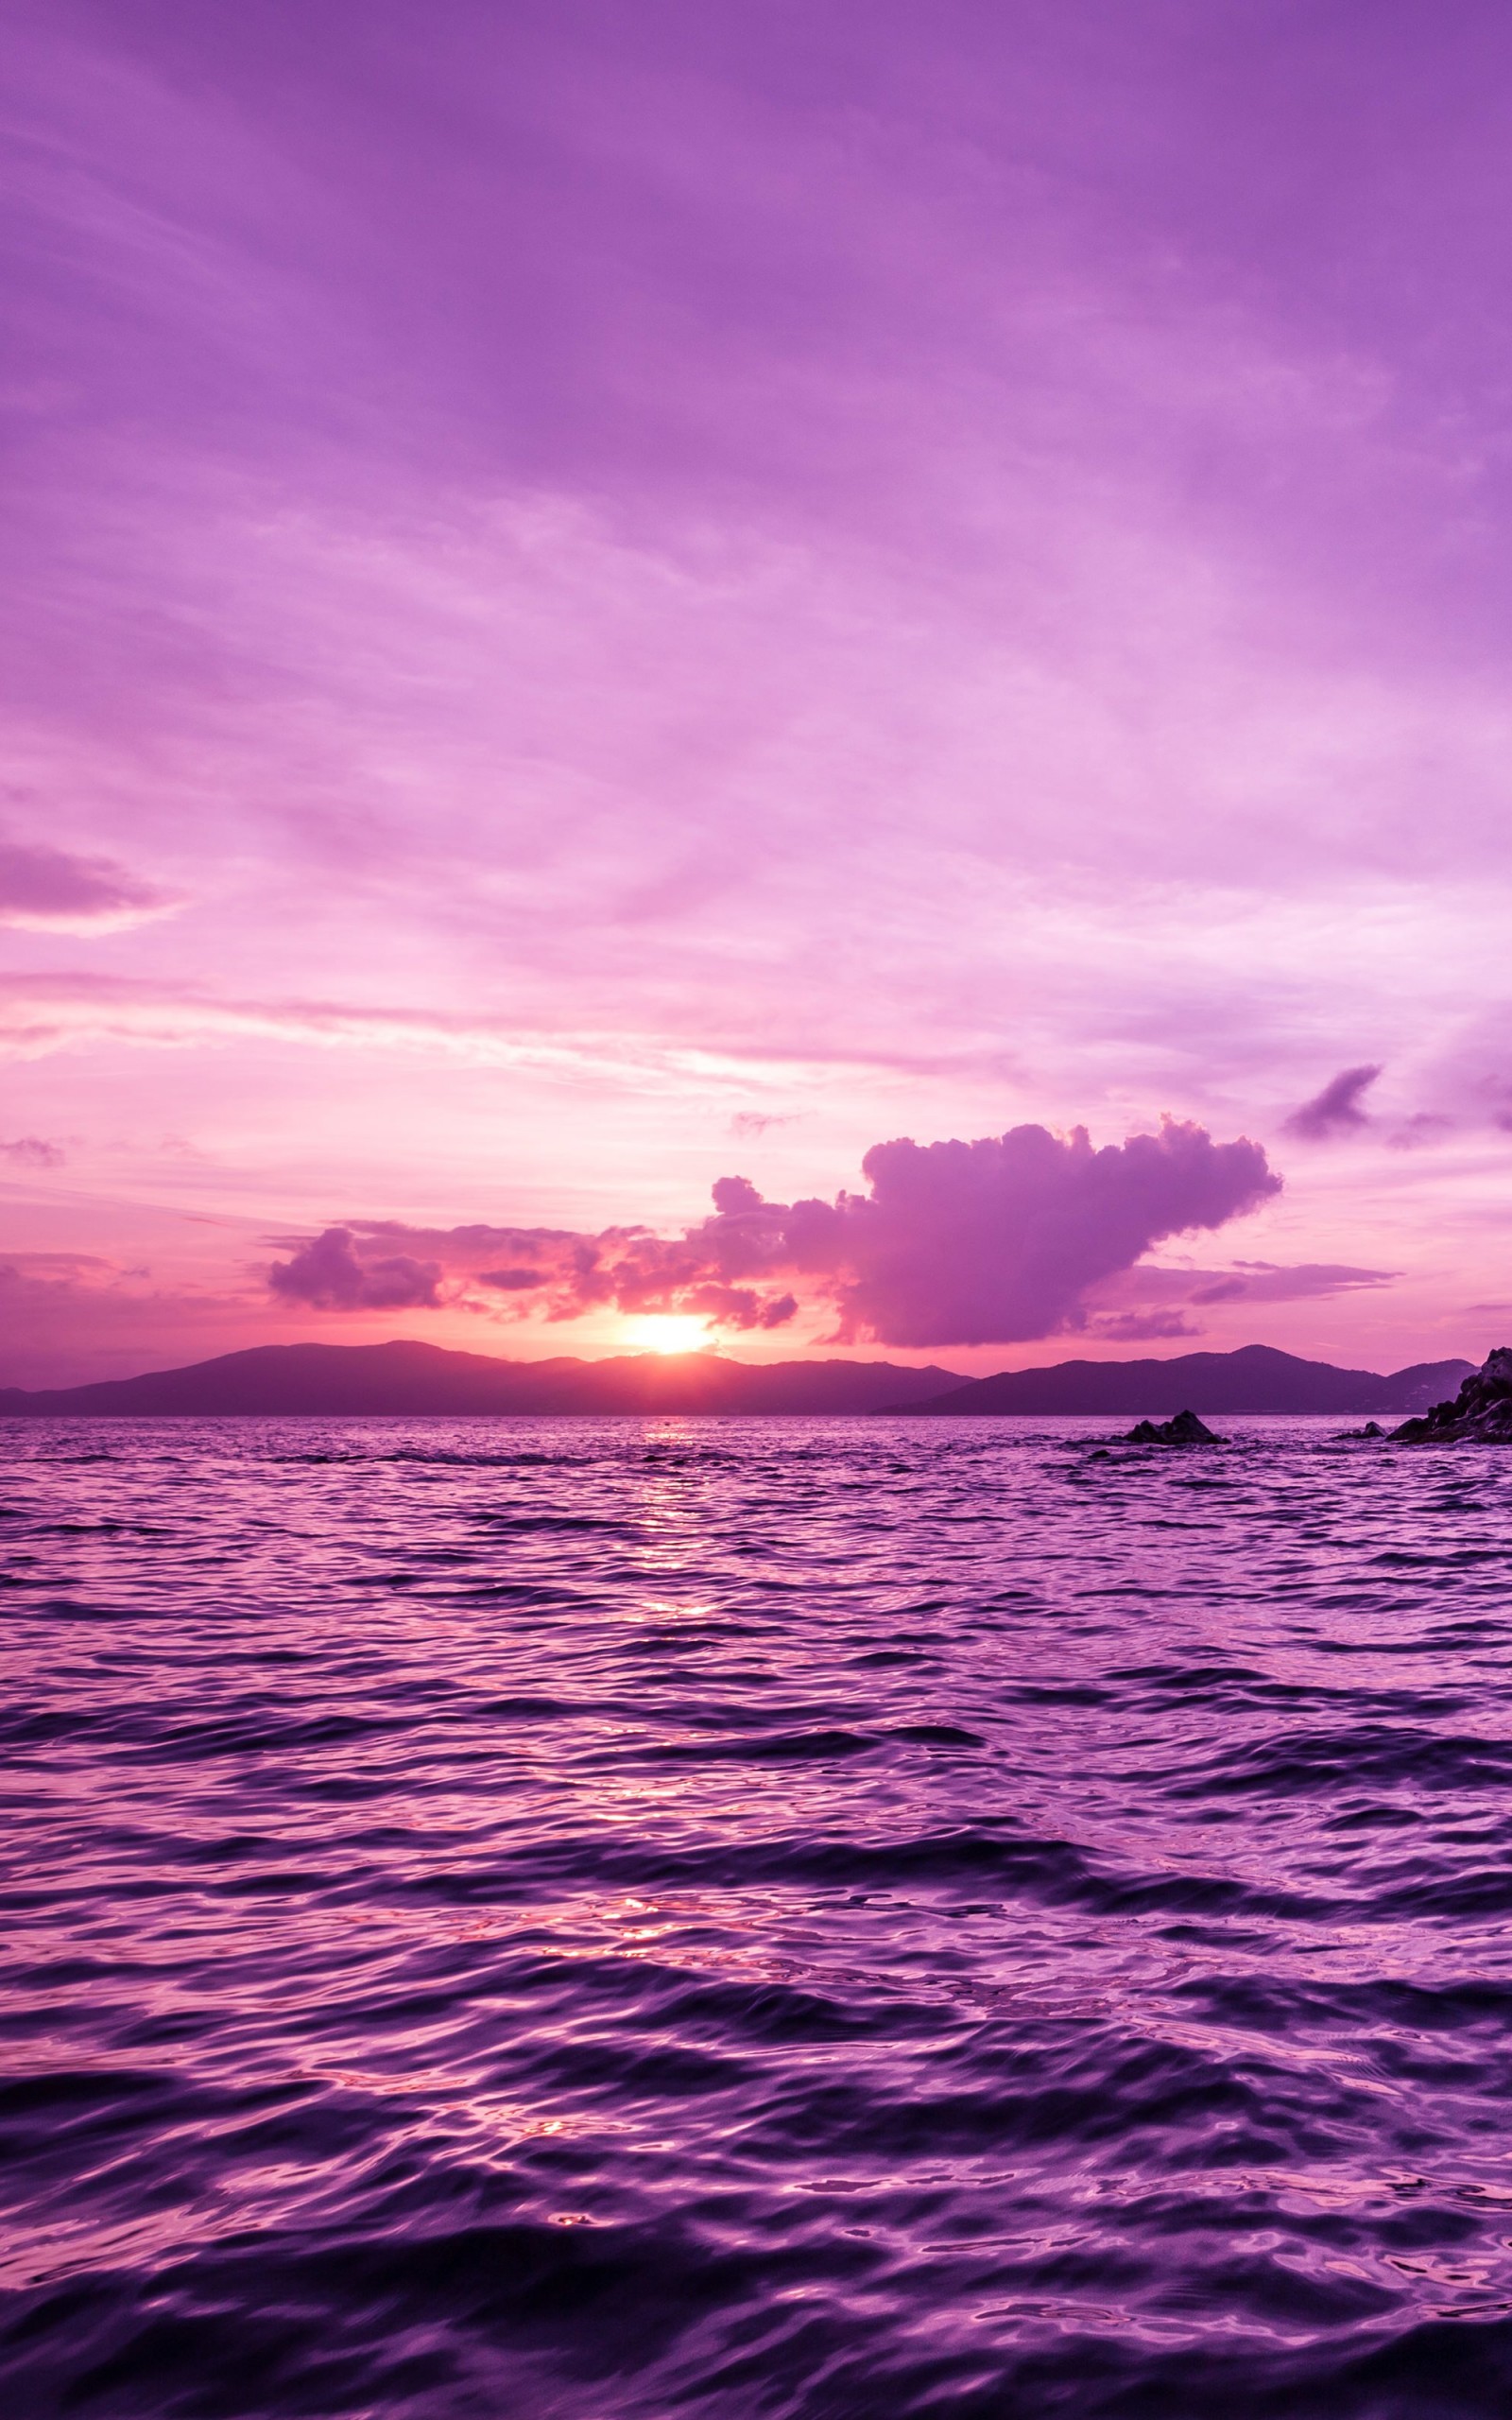 Pelican Island Sunset, British Virgin Islands Wallpaper for Amazon Kindle Fire HDX 8.9